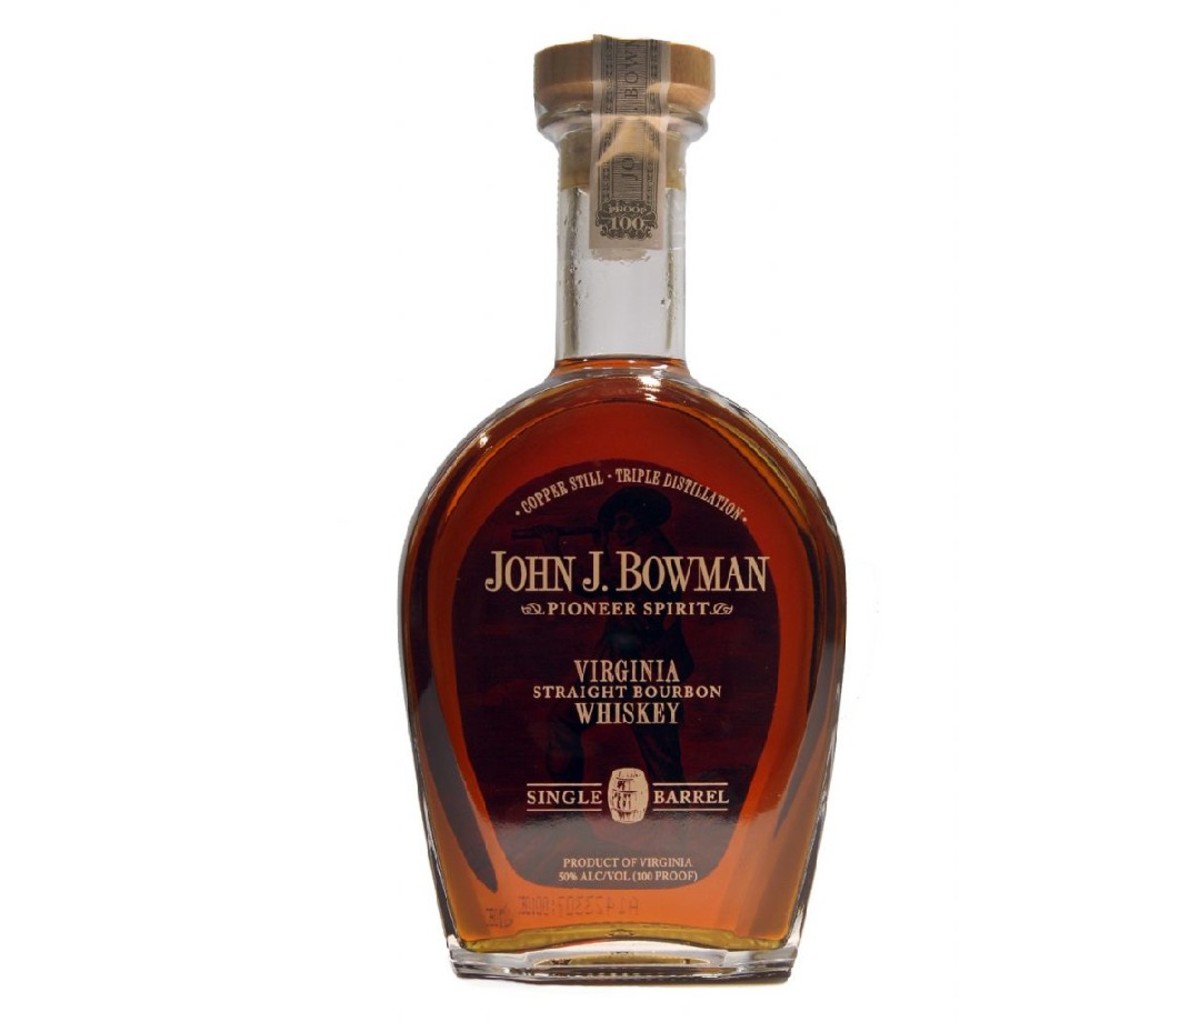 Bottle of John J. Bowman Single Barrel Bourbon